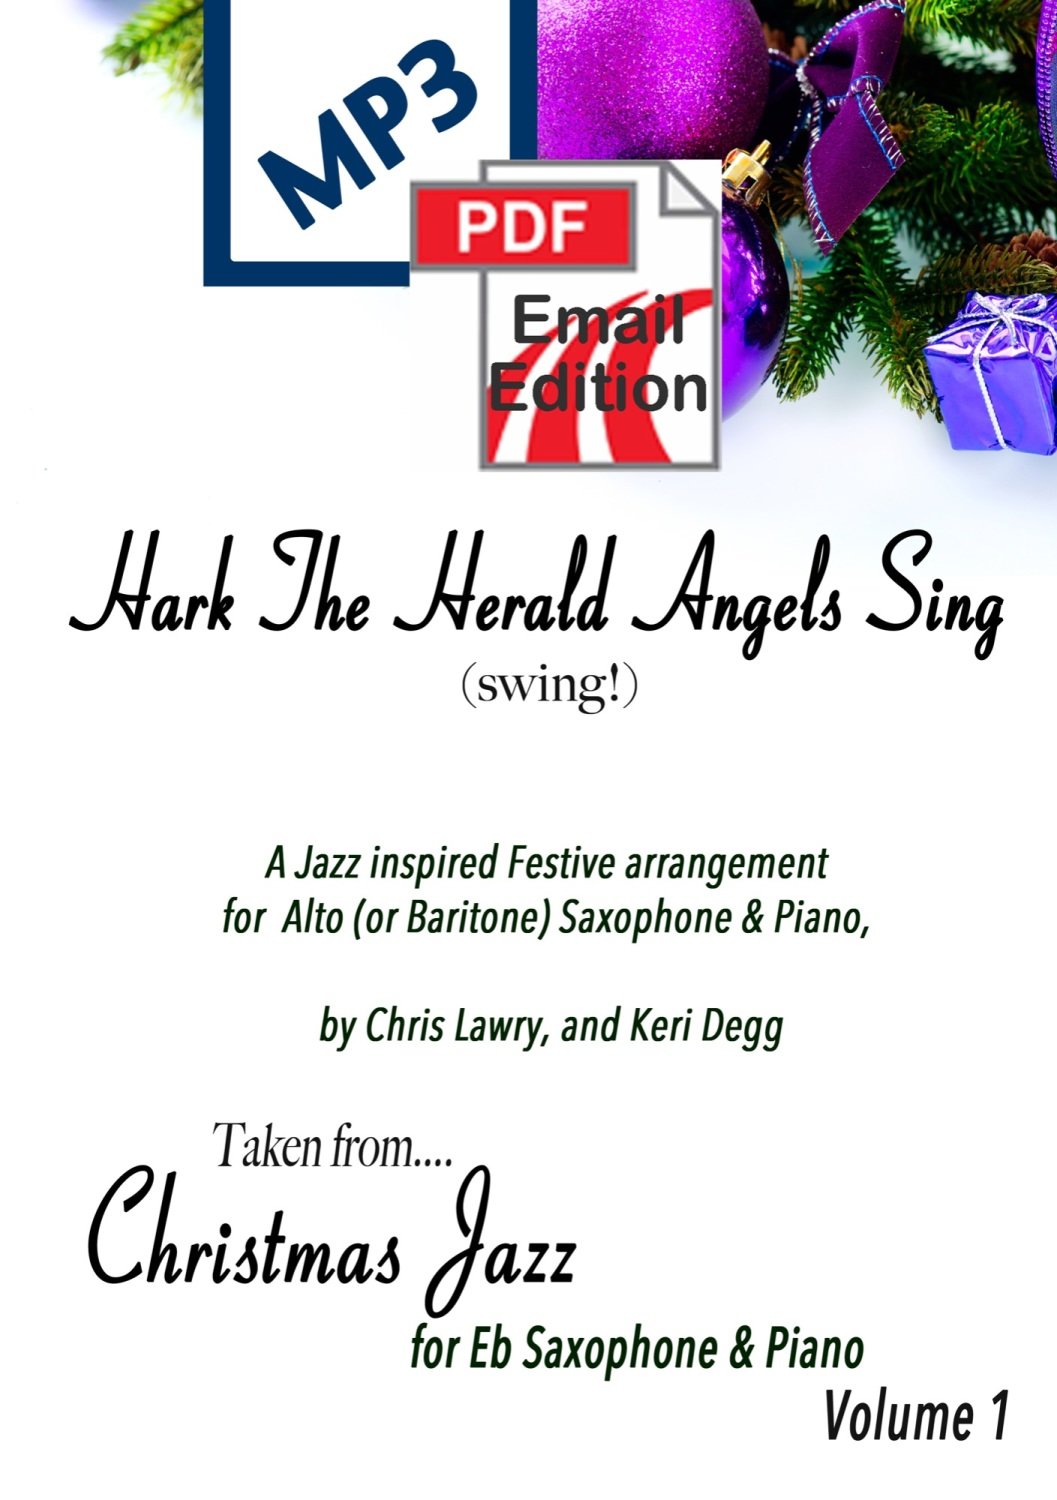 Hark The Herald Angels Sing (Swing!) Jazz inspired arrangement Alto (or Bar